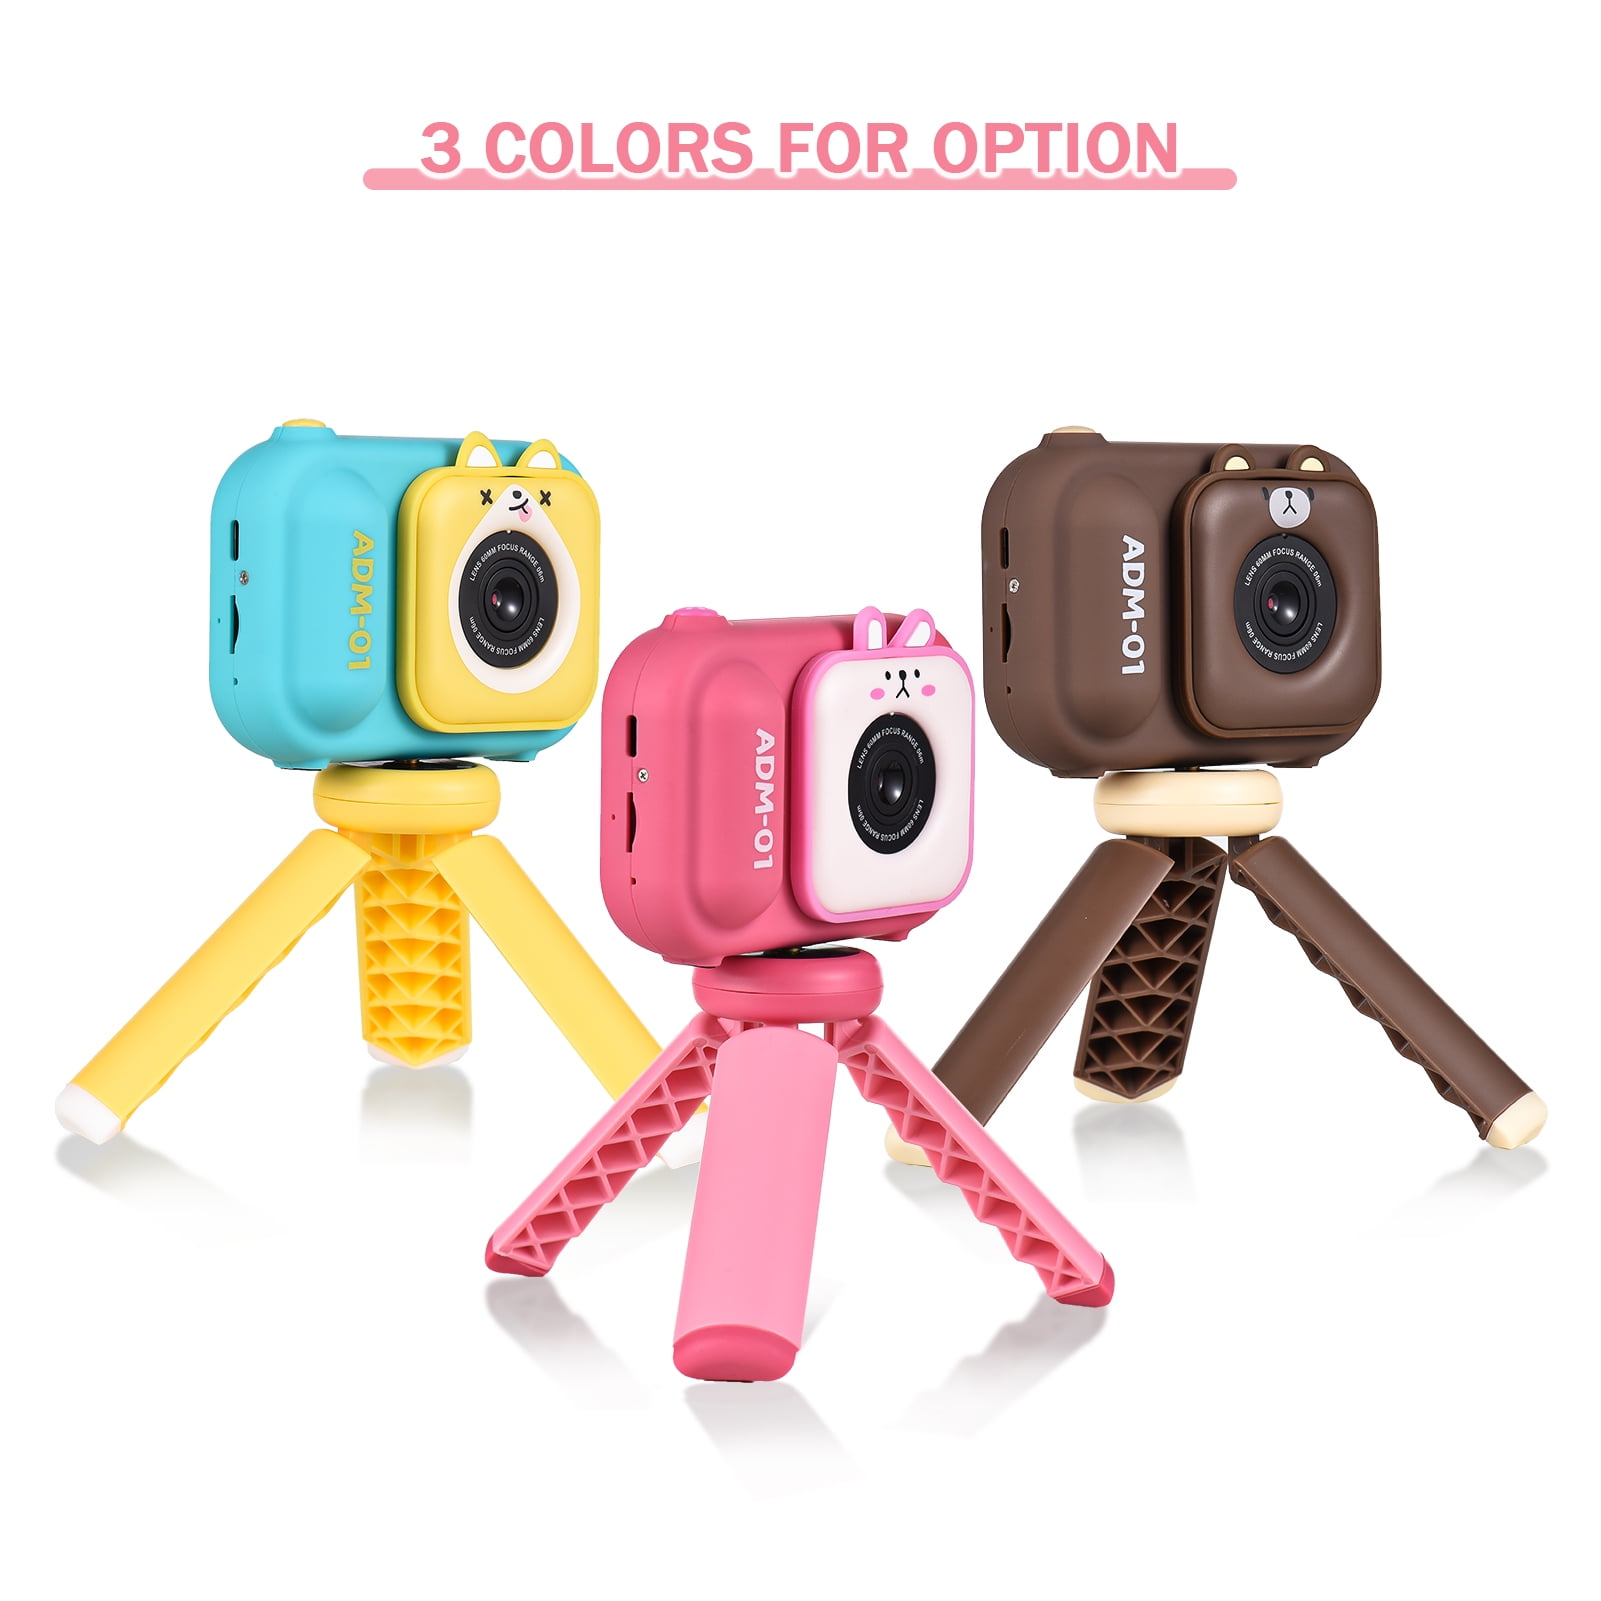 Yukistar Kids Camera, HD Digital Video Camera for Kids with Tripod